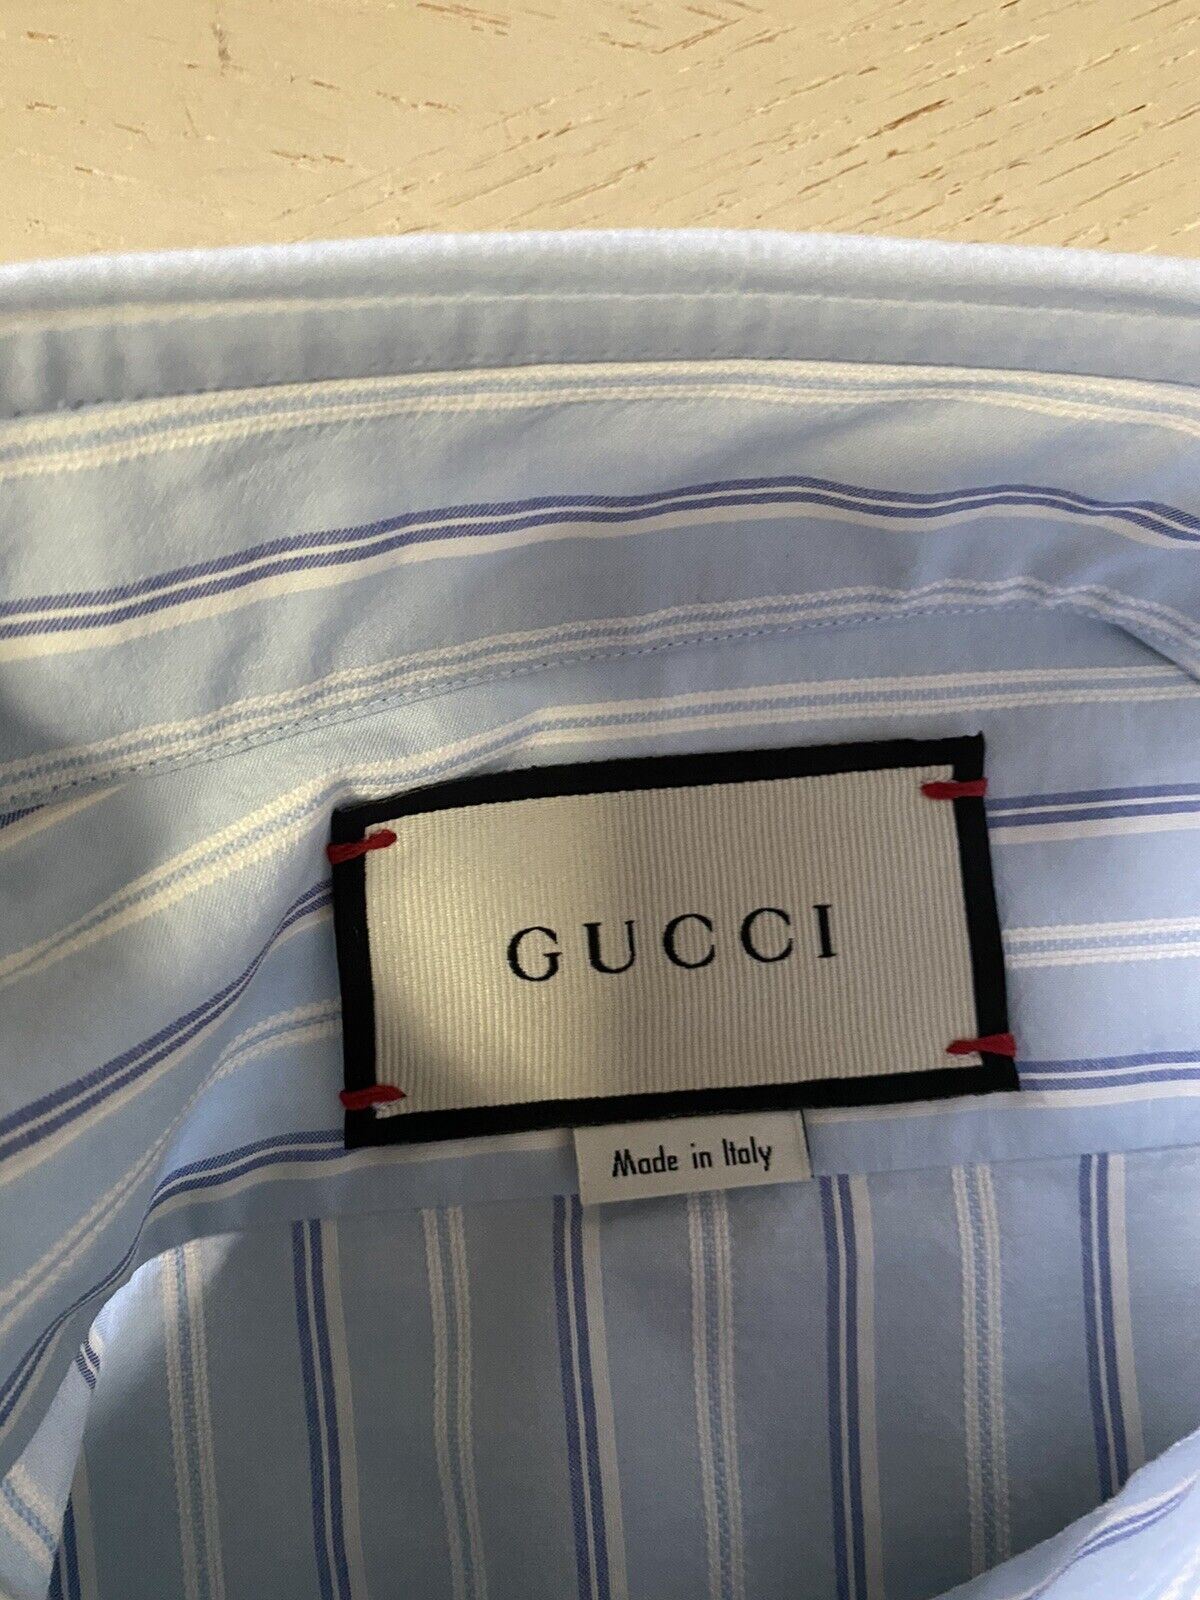 New Gucci Men’s Dress Shirt Color Blue 41/16 Italy